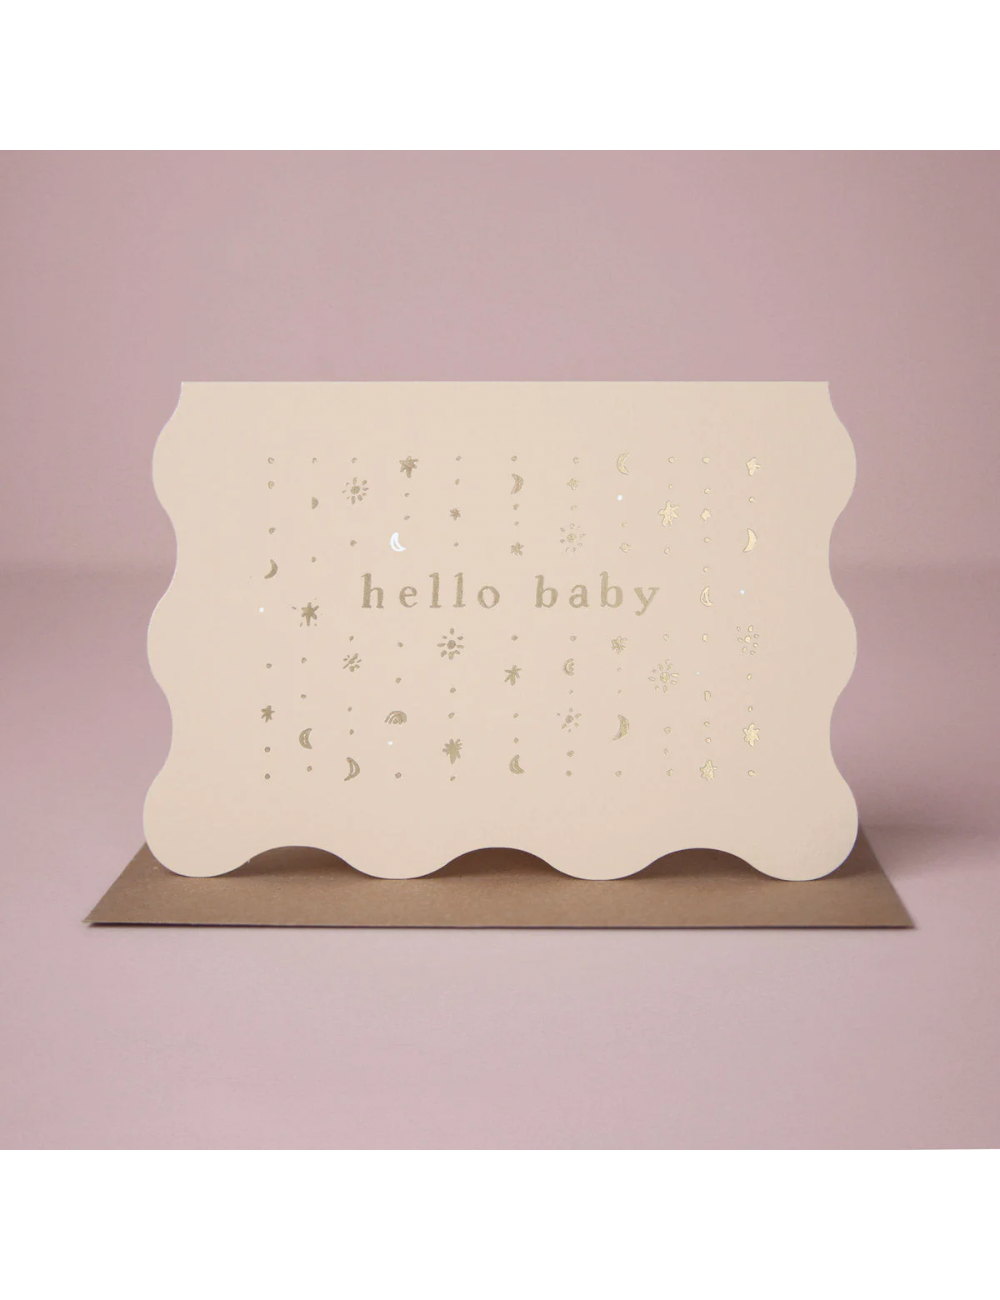 Stars Hello Baby Card